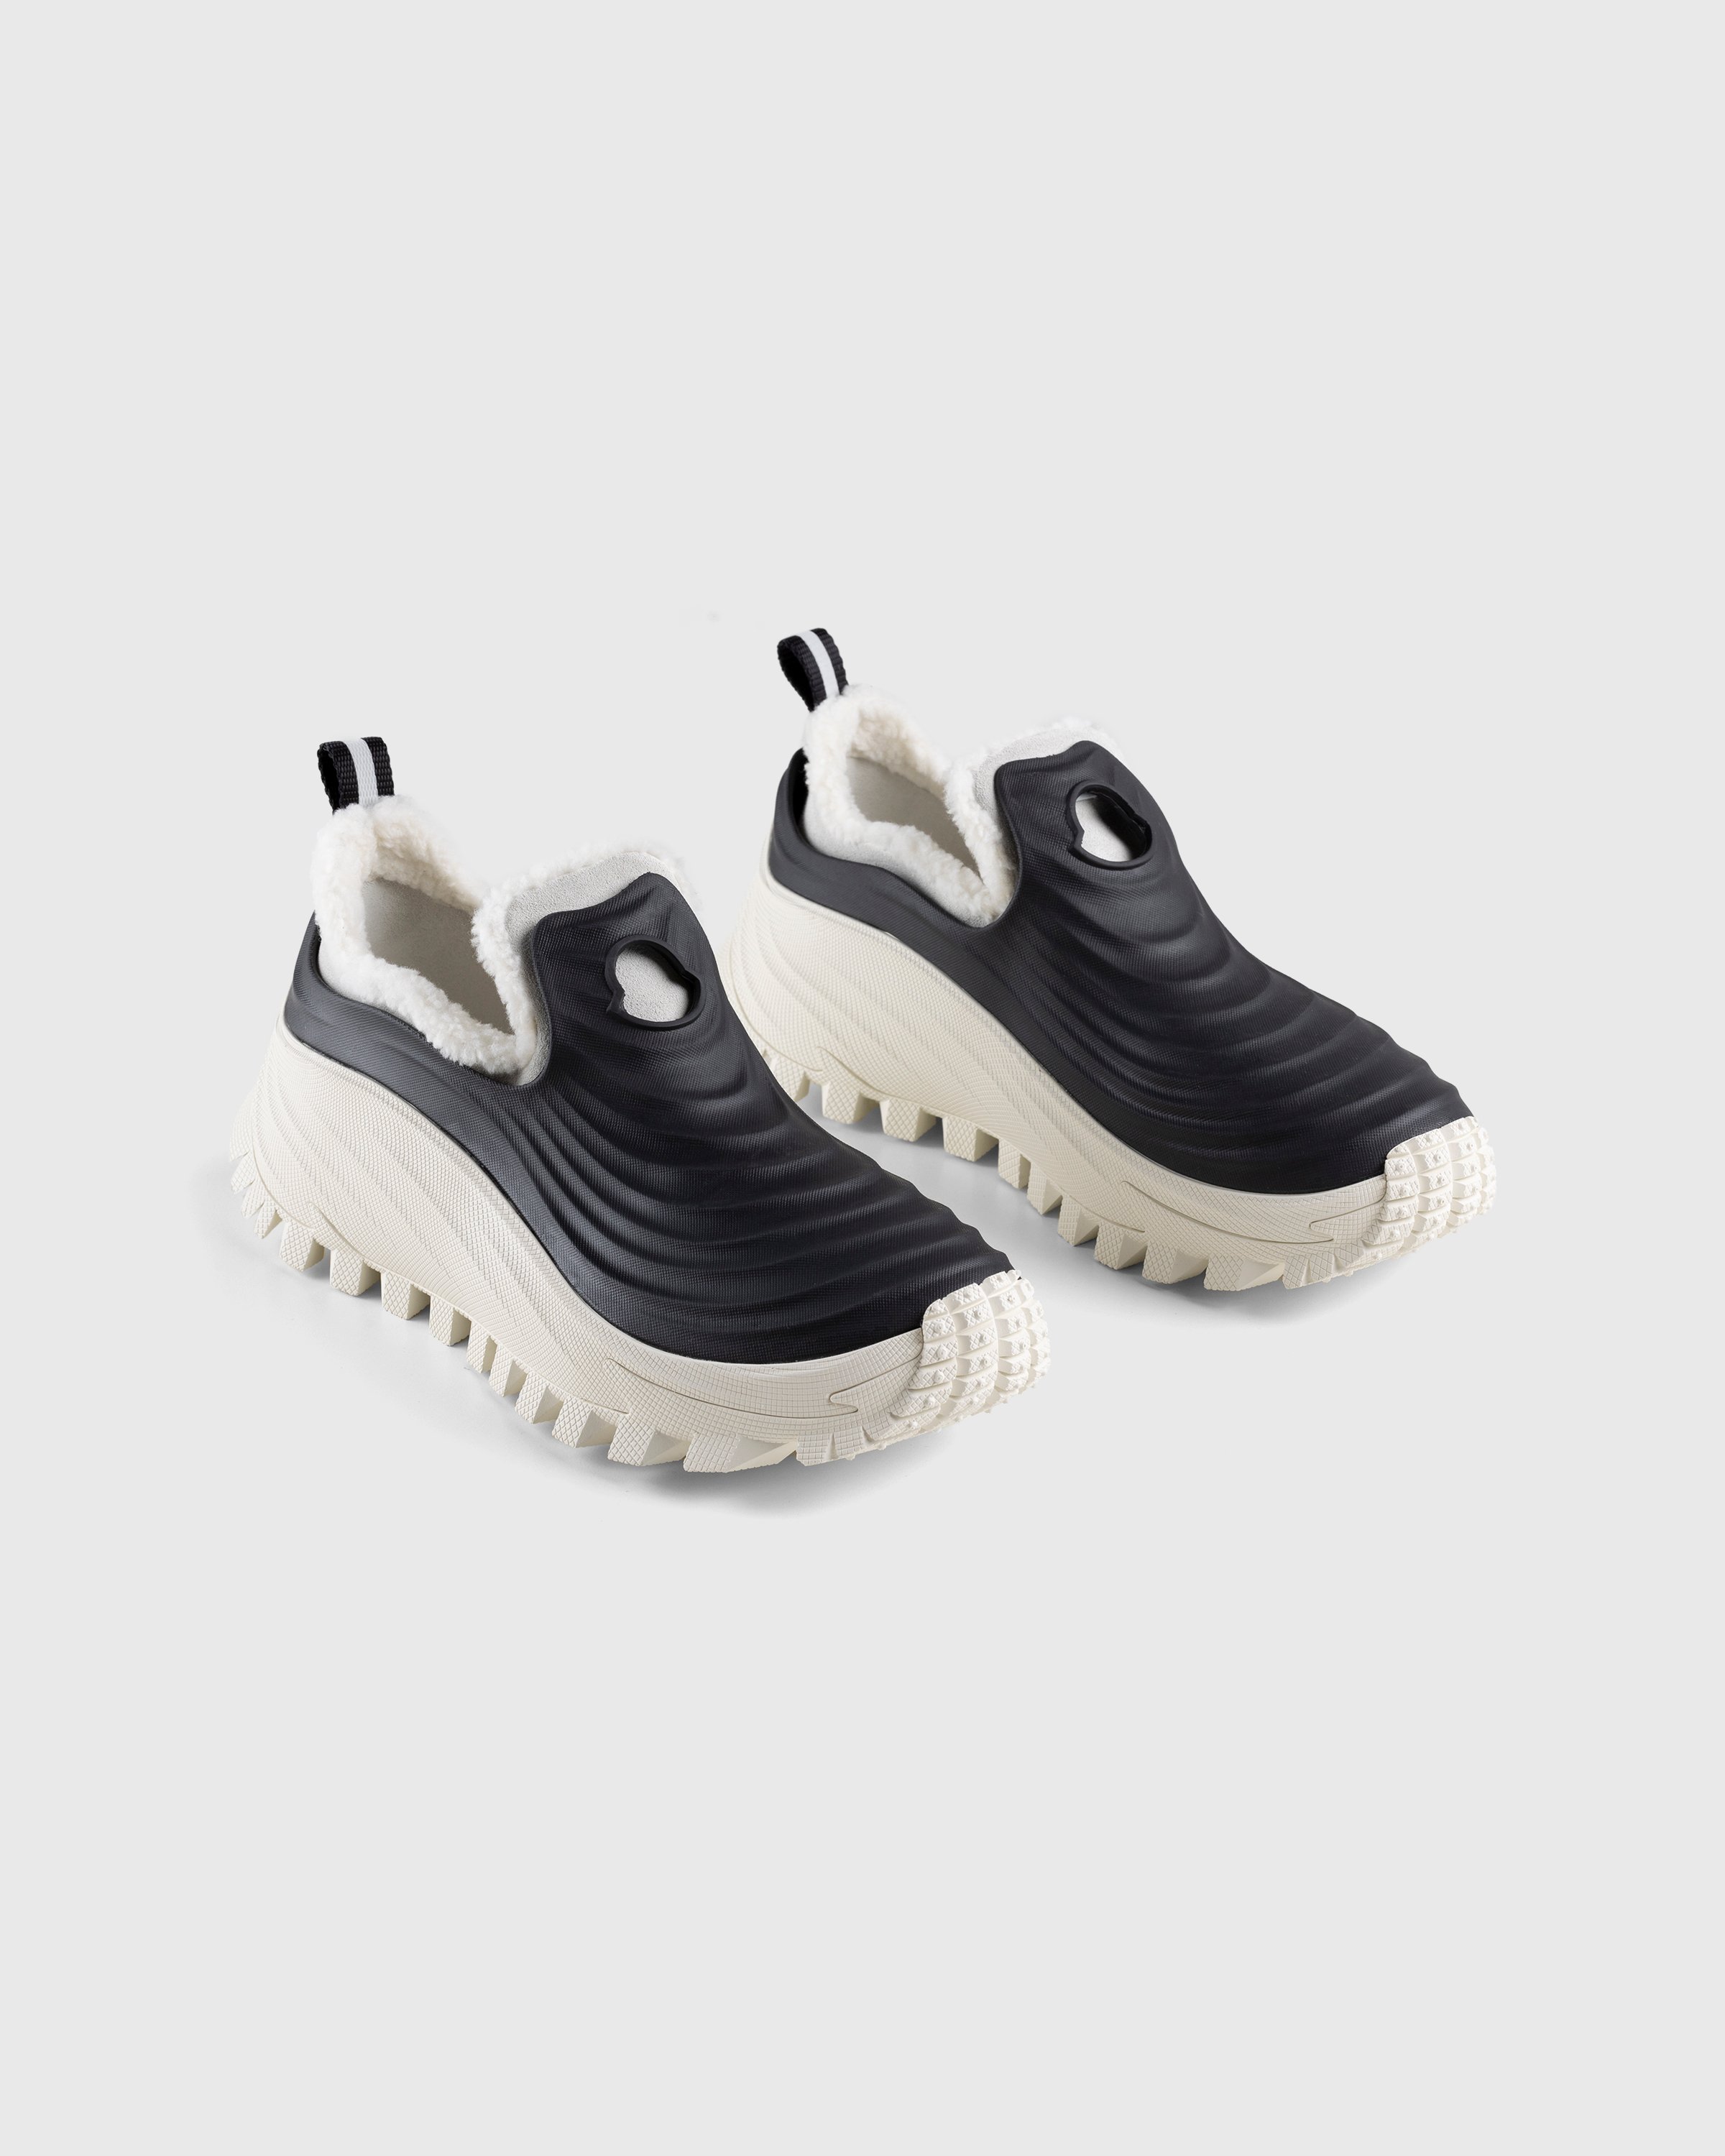 Moncler - Aqua Rain Boots Black/White - Footwear - Grey - Image 3